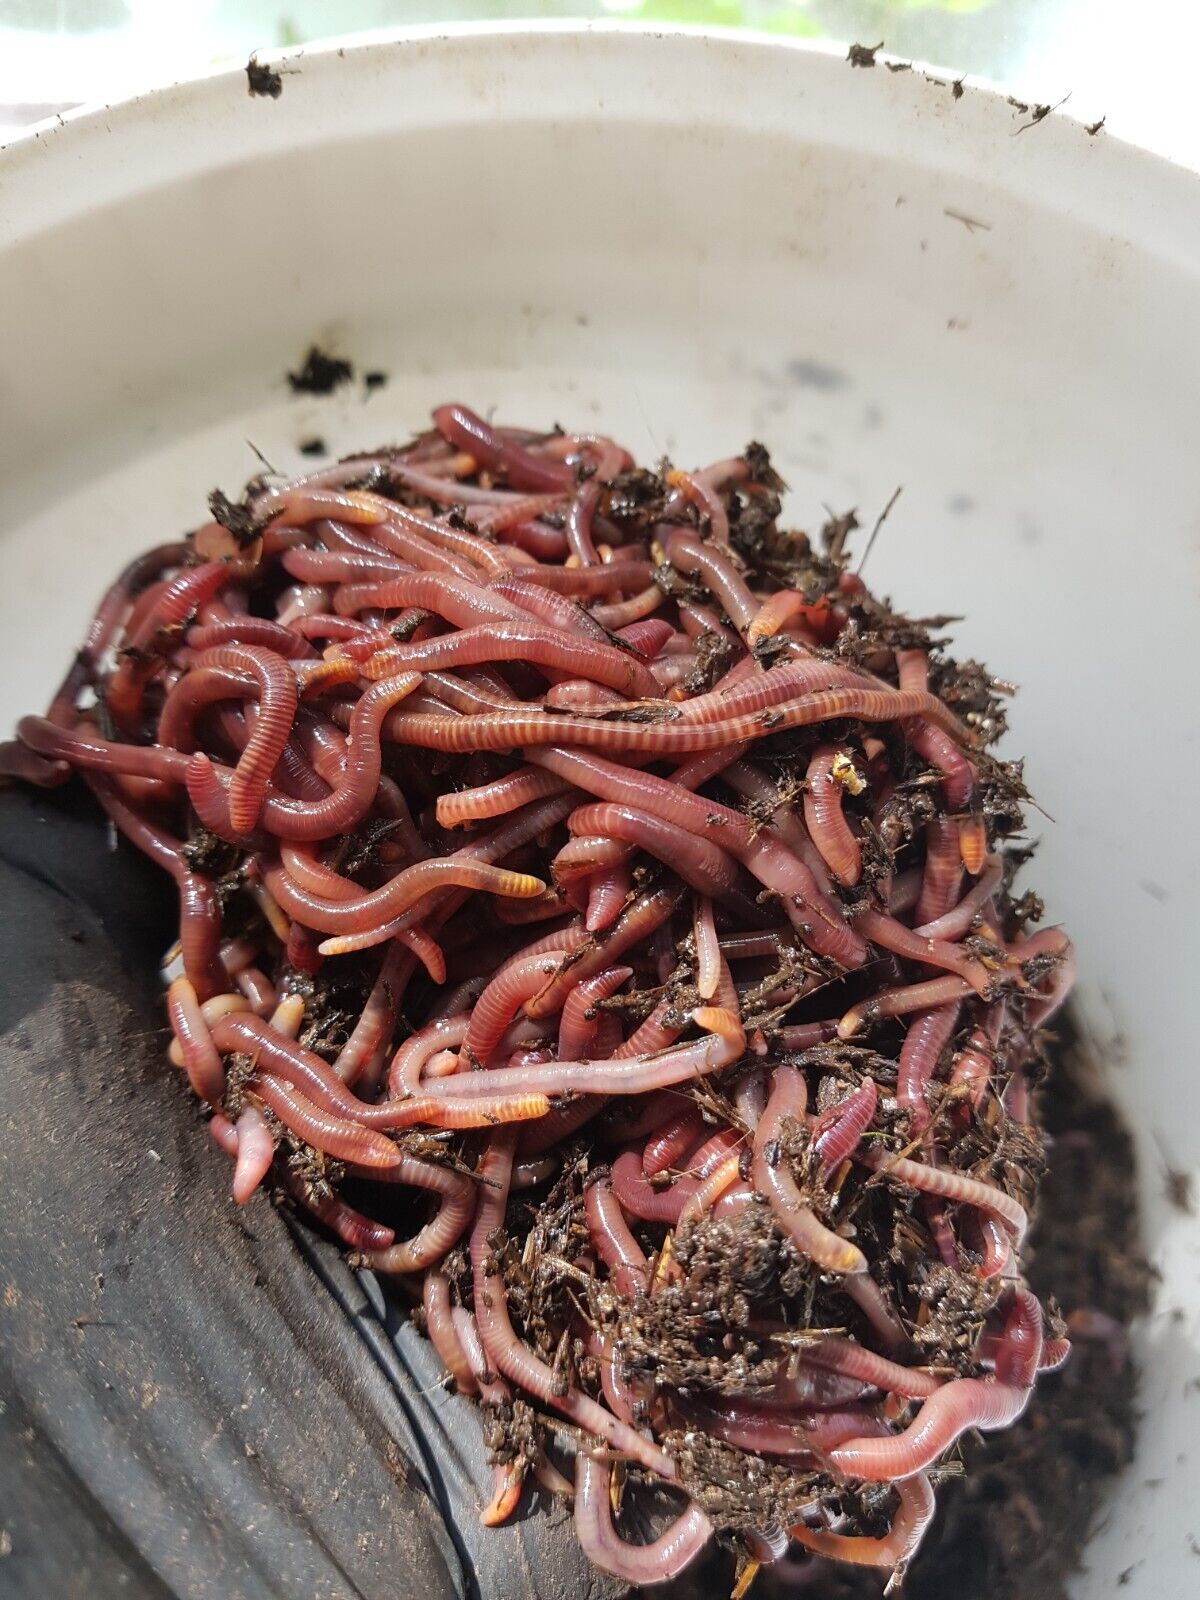 250 Stck. Kompostwürmer Gartenwürmer Regenwürmer Kompostbeschleuniger Wurmkiste